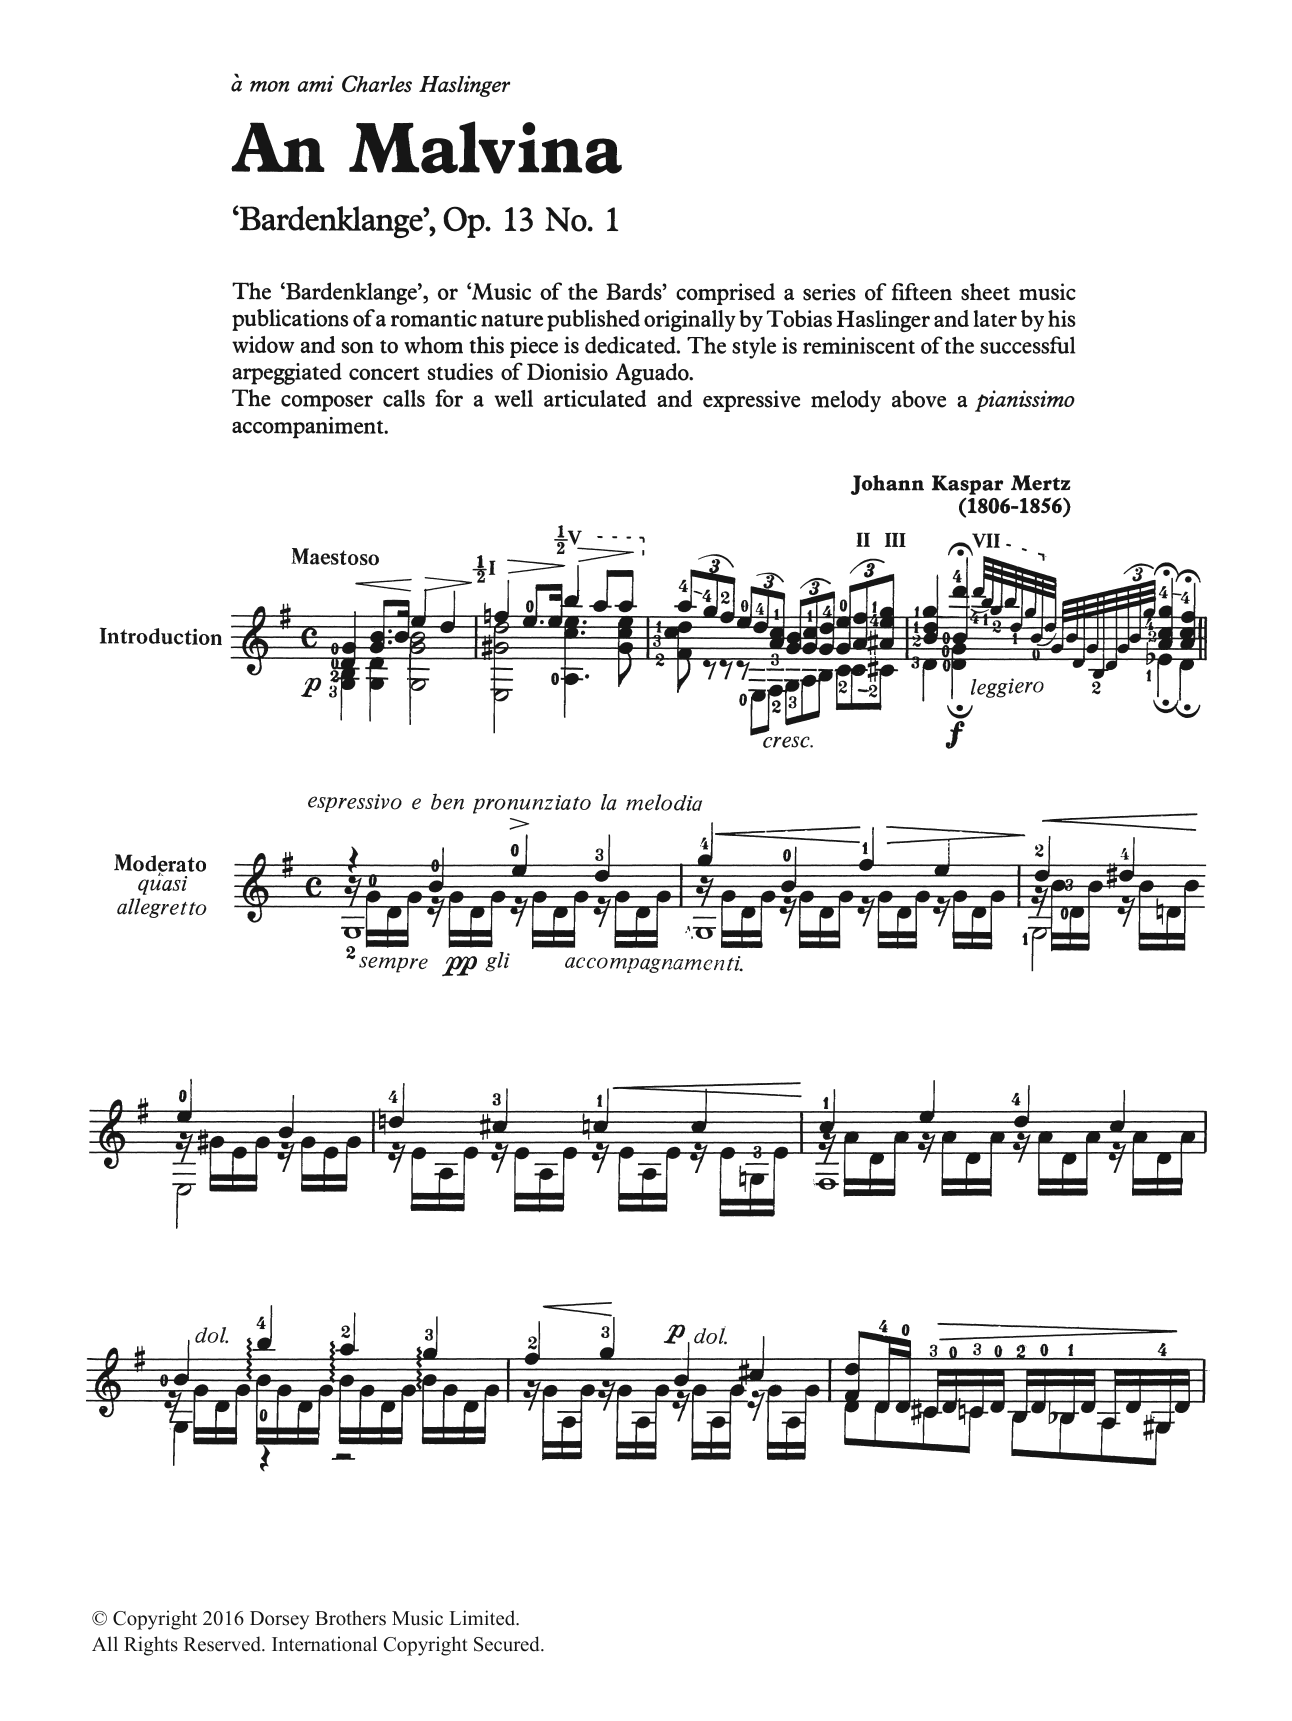 Johann Kaspar Mertz An Malvina Sheet Music Notes & Chords for Guitar - Download or Print PDF